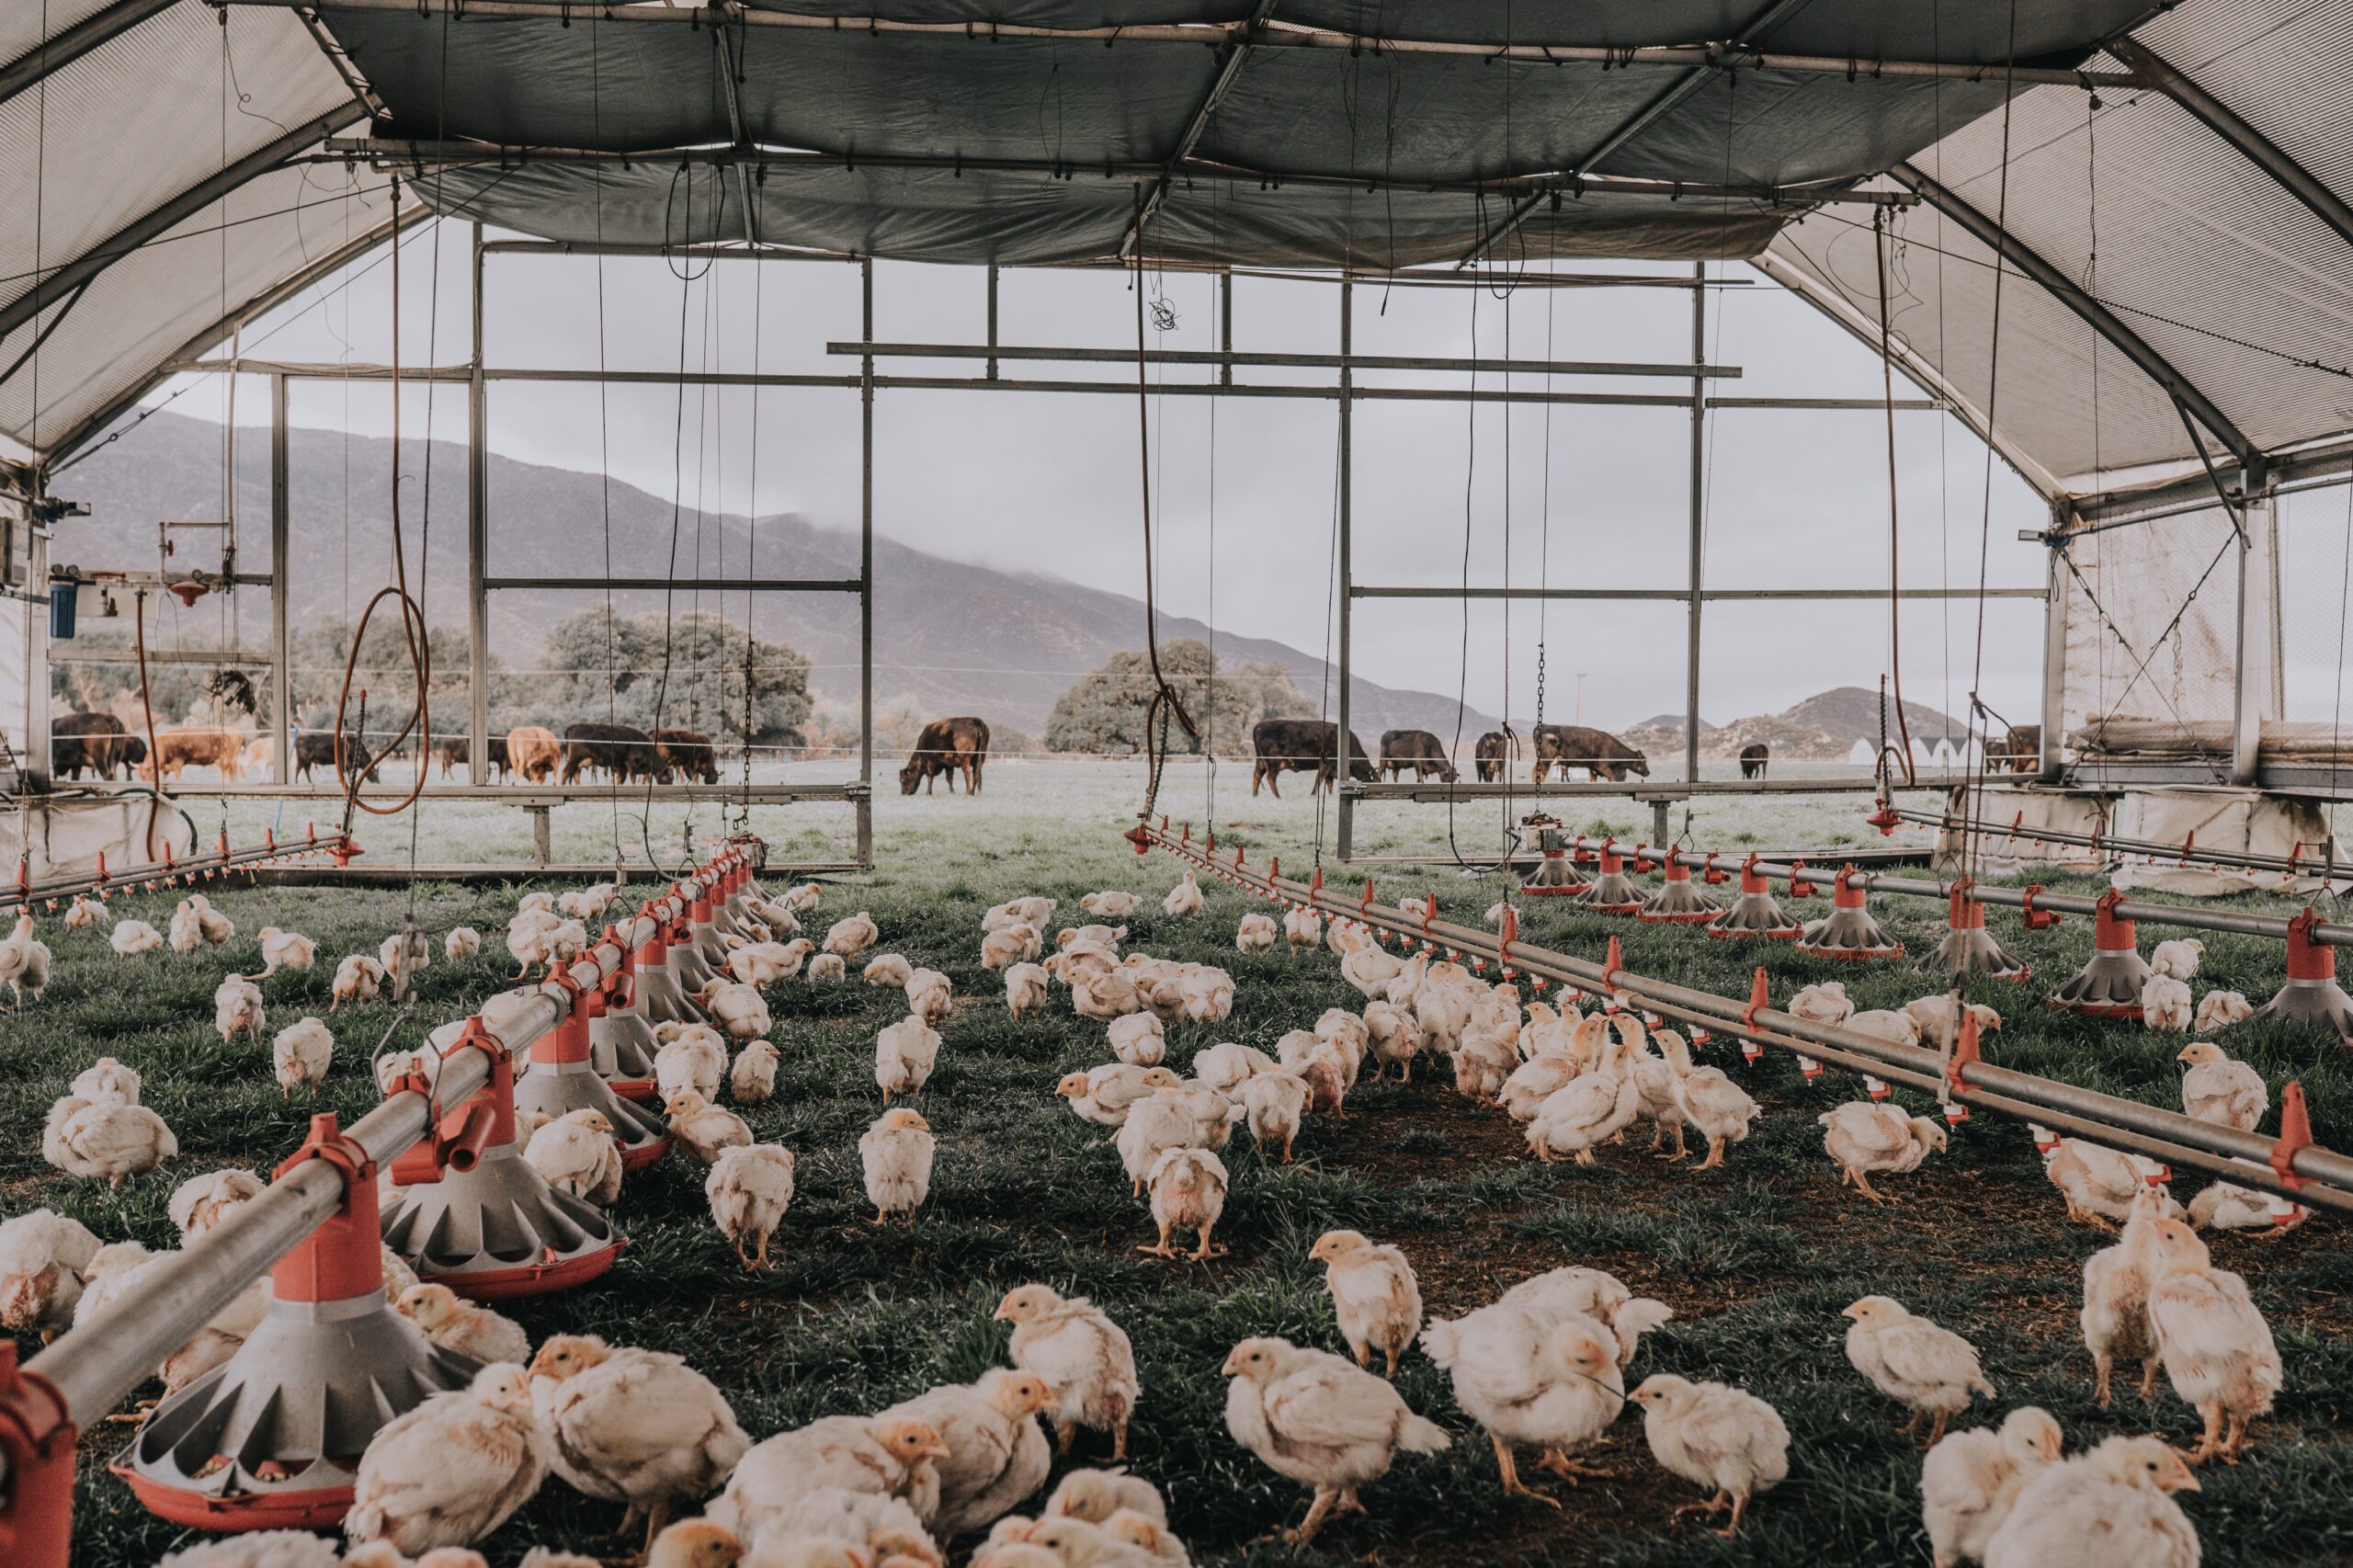 II. Understanding the Role of Hens in Regenerative Agriculture